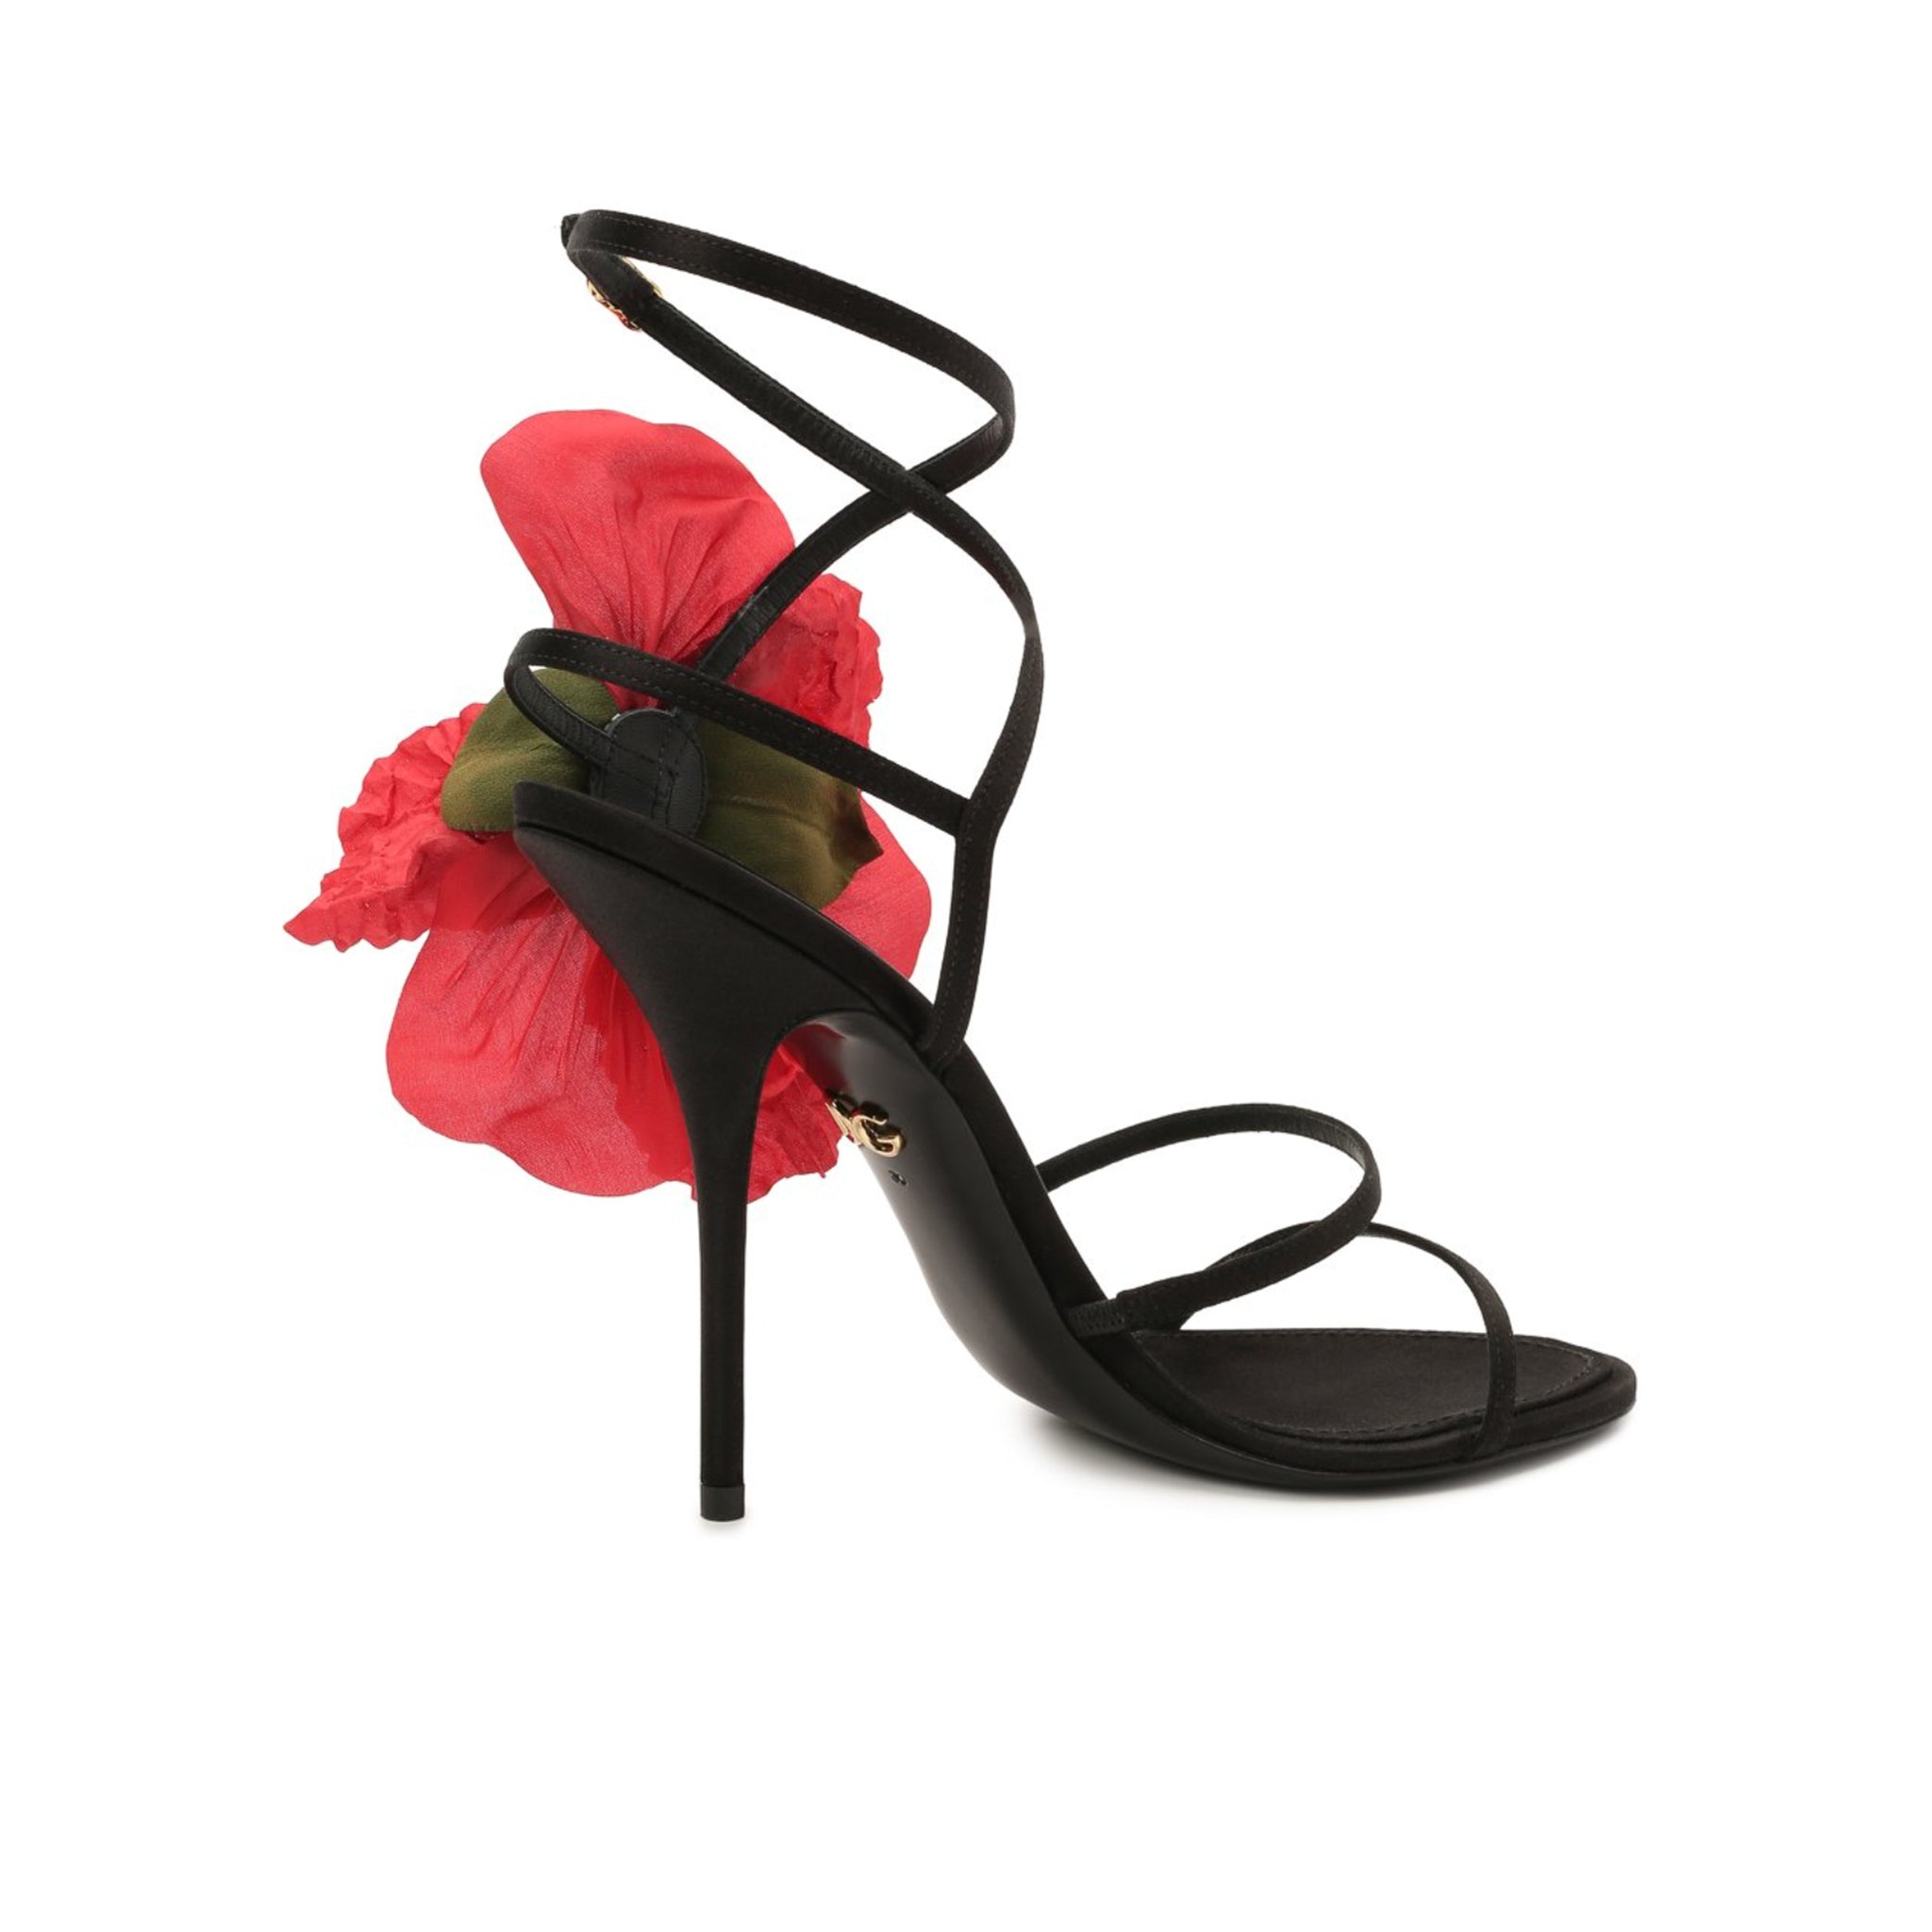 DOLCE-GABBANA-OUTLET-SALE-Dolce-Gabbana-Keira-Sandals-Sandalen-ARCHIVE-COLLECTION-3.jpg